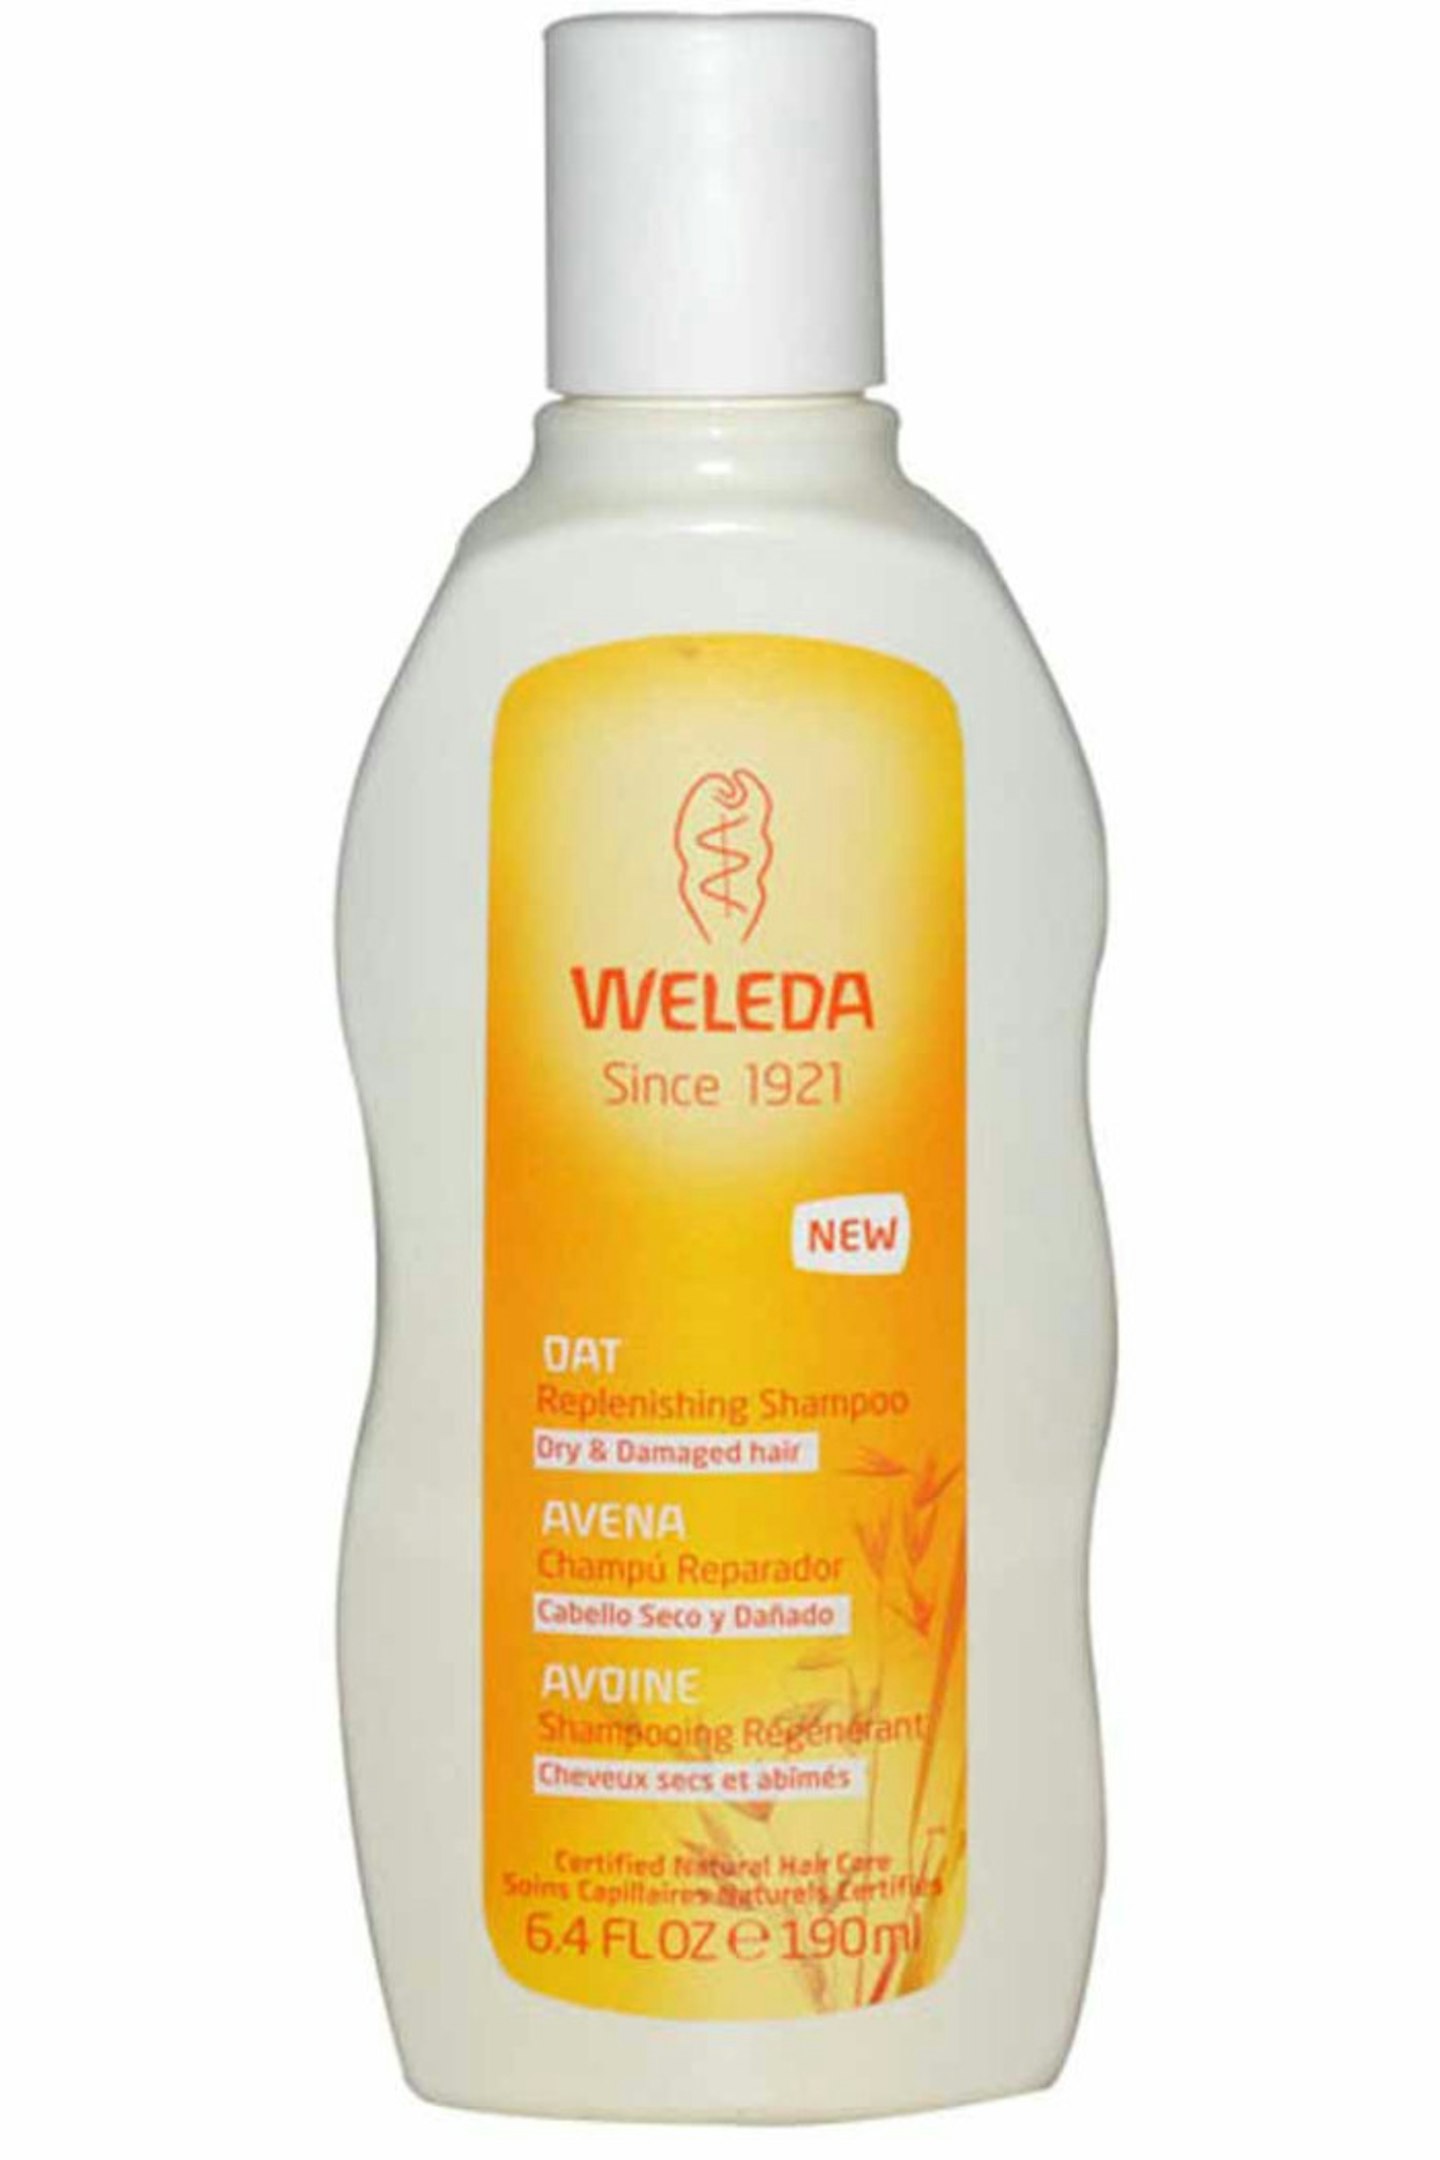 10. Weleda Oat Replenishing Shampoo, £8.95